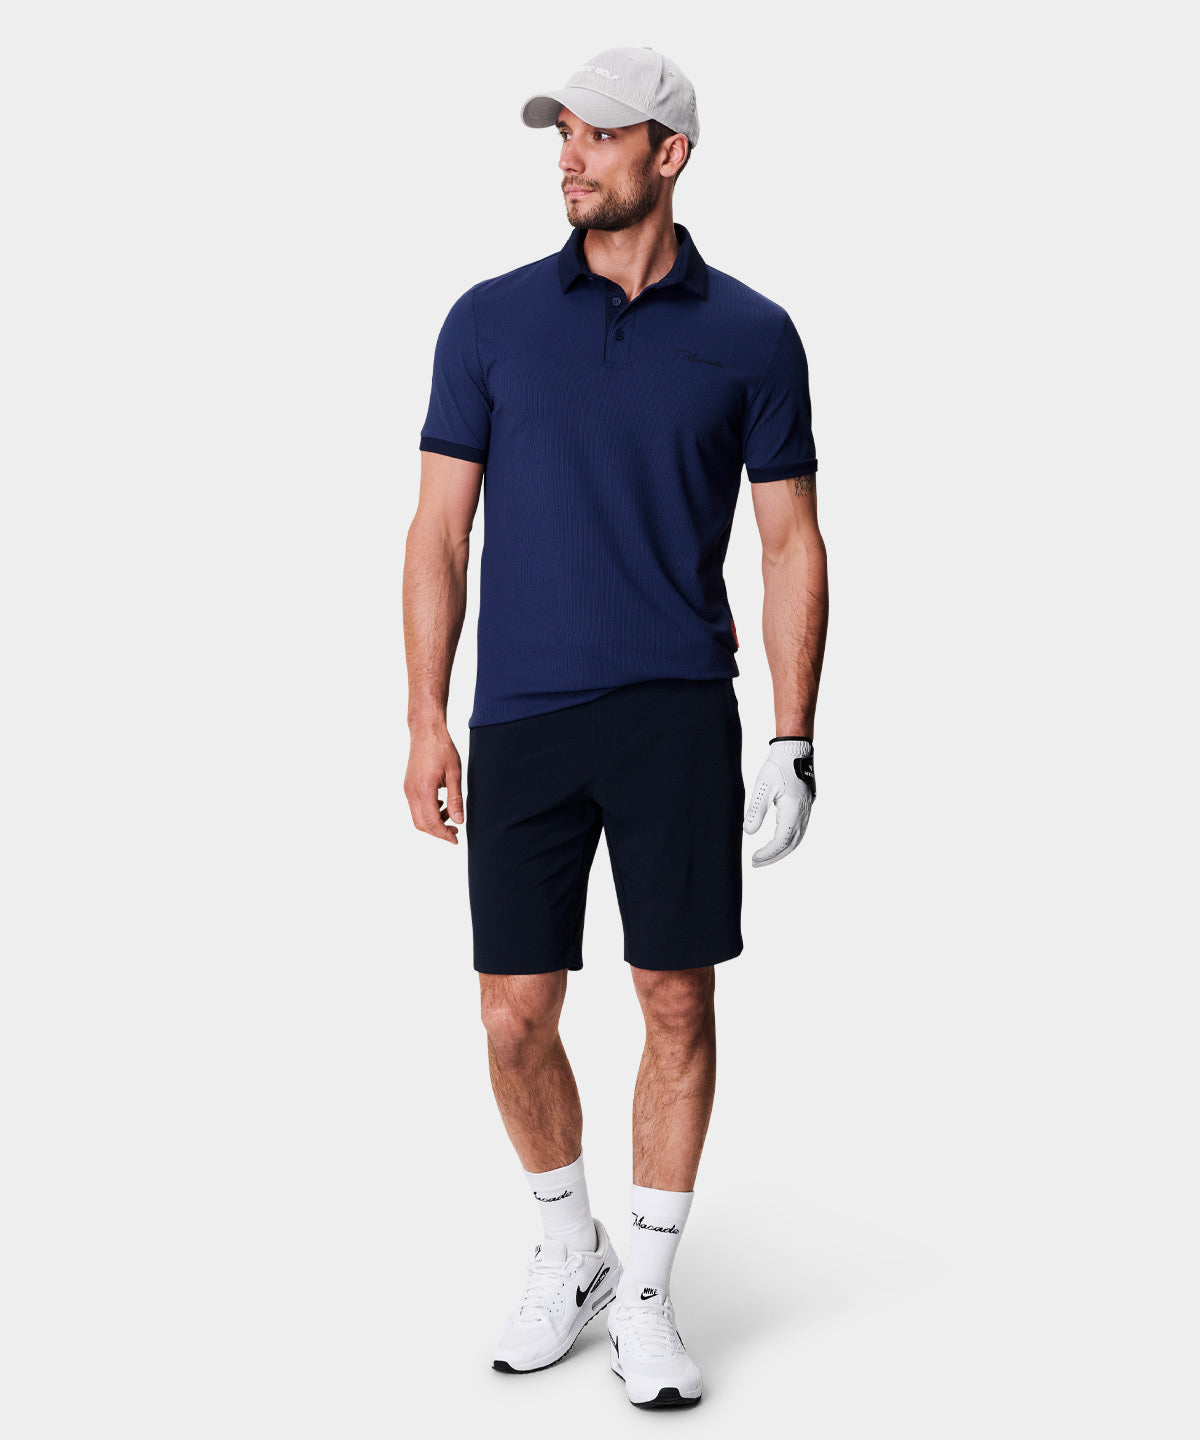 Jeston Dark Blue Polo Shirt Macade Golf